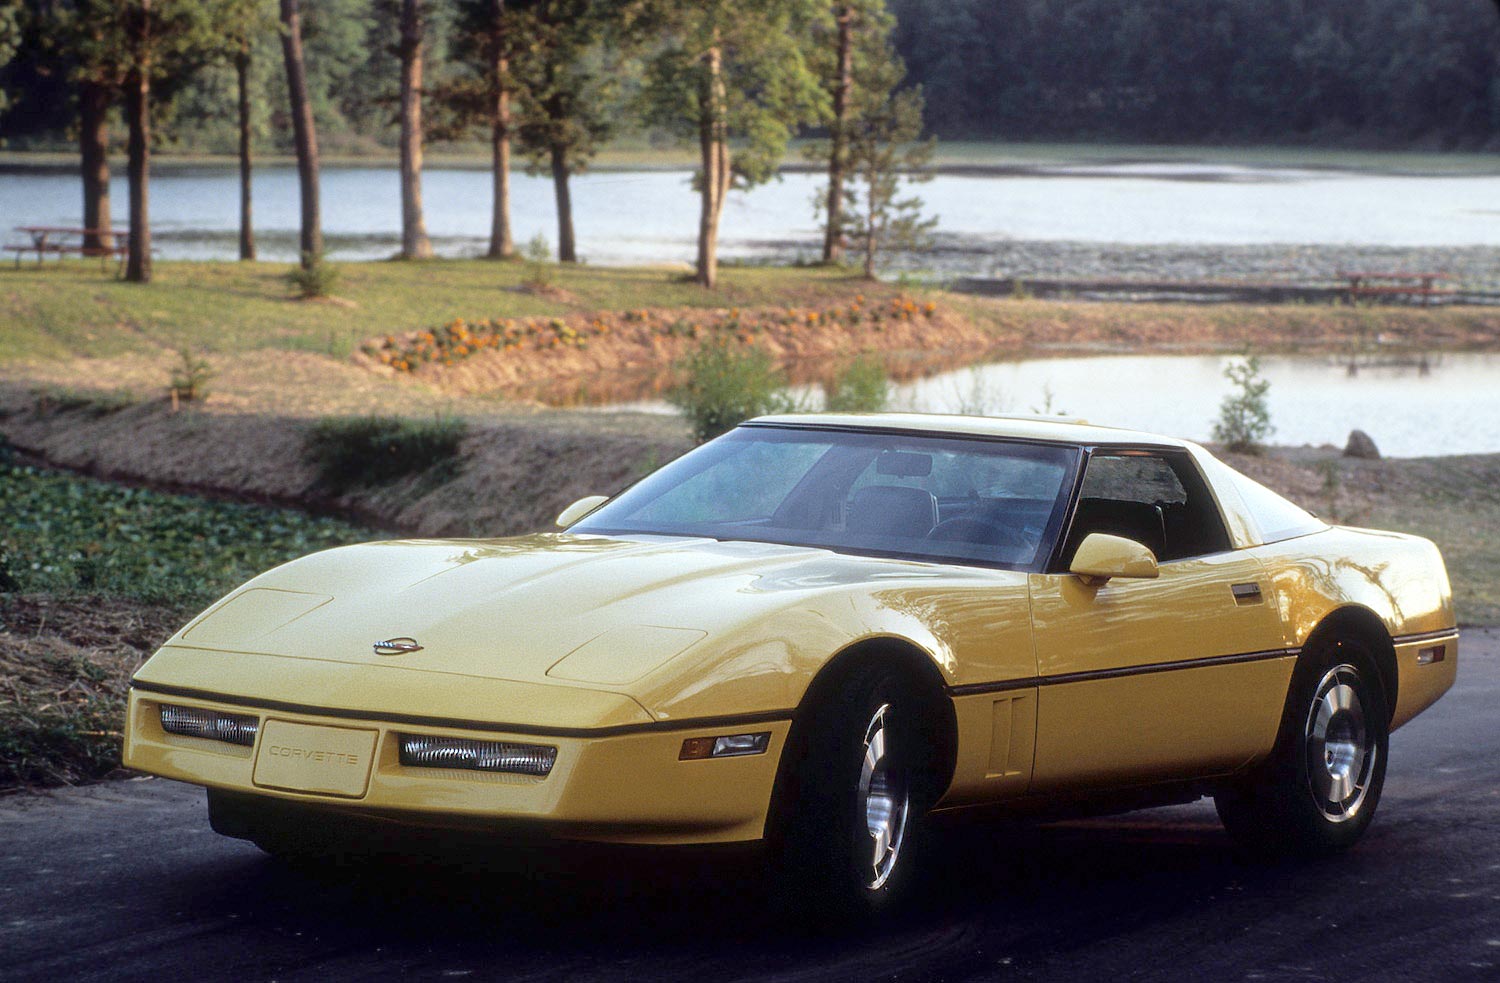 1986 Corvette in Yellow